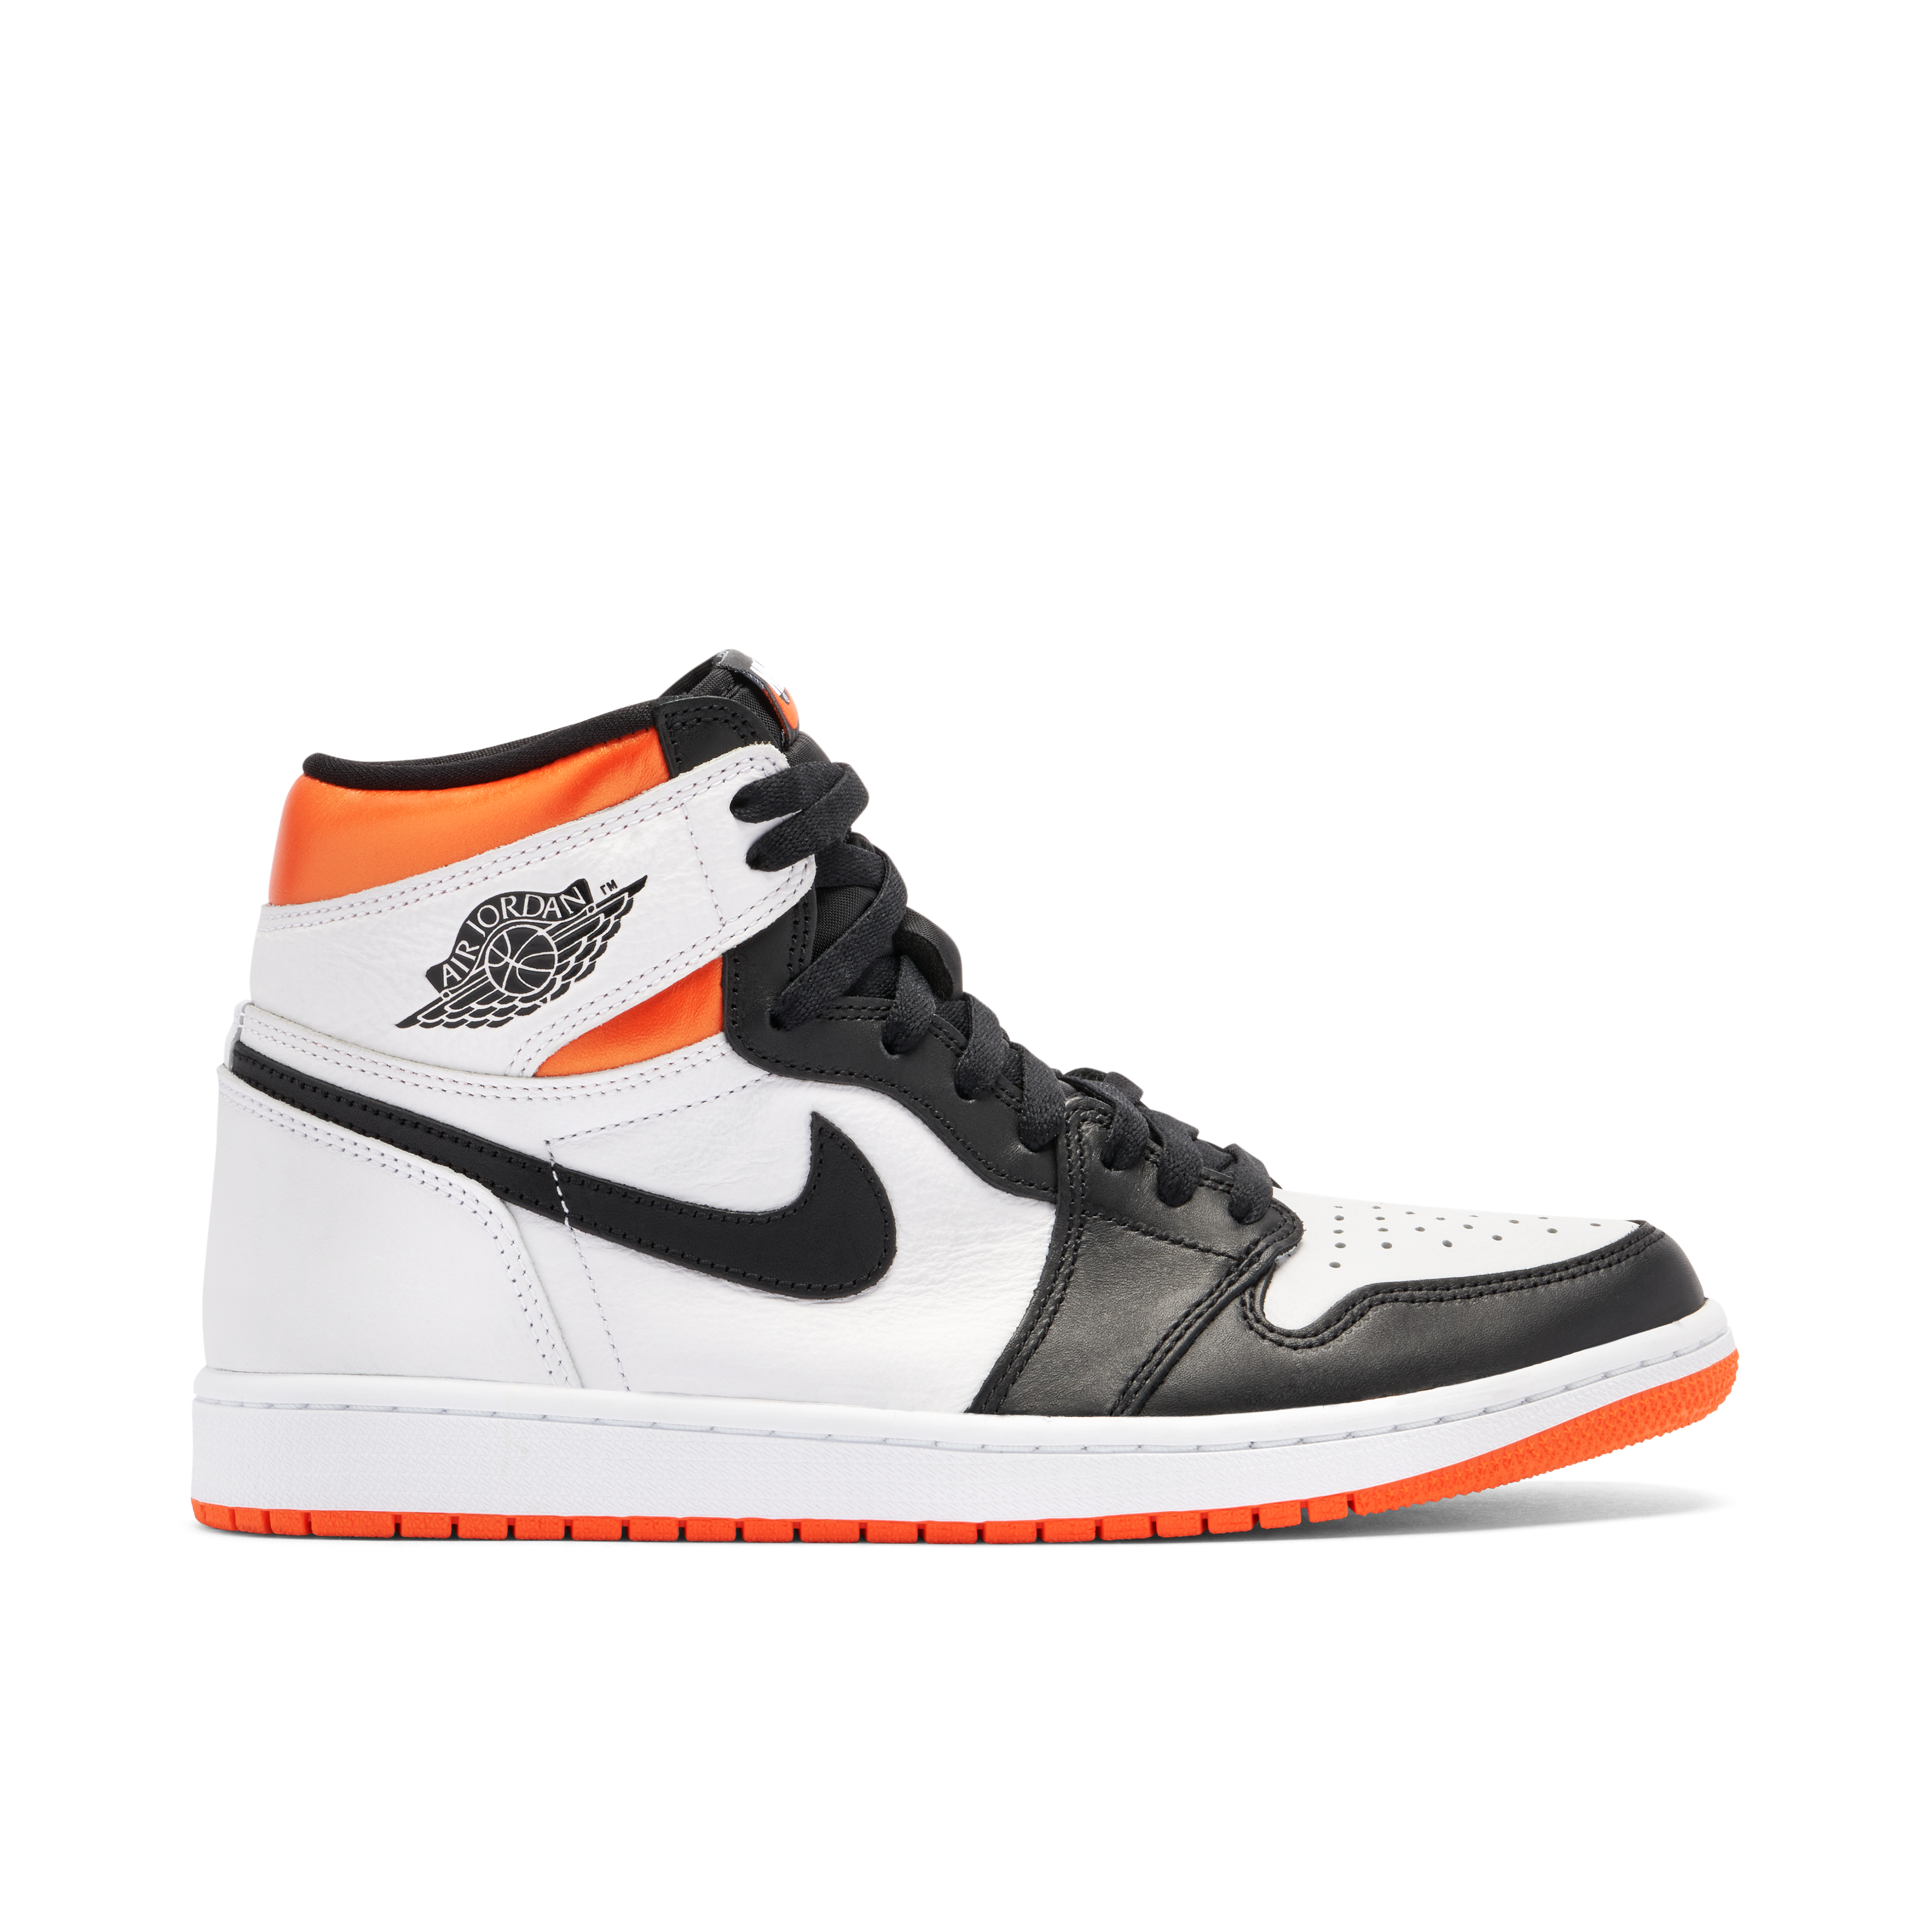 Orange Jordans | New Orange Air Jordans from Nike